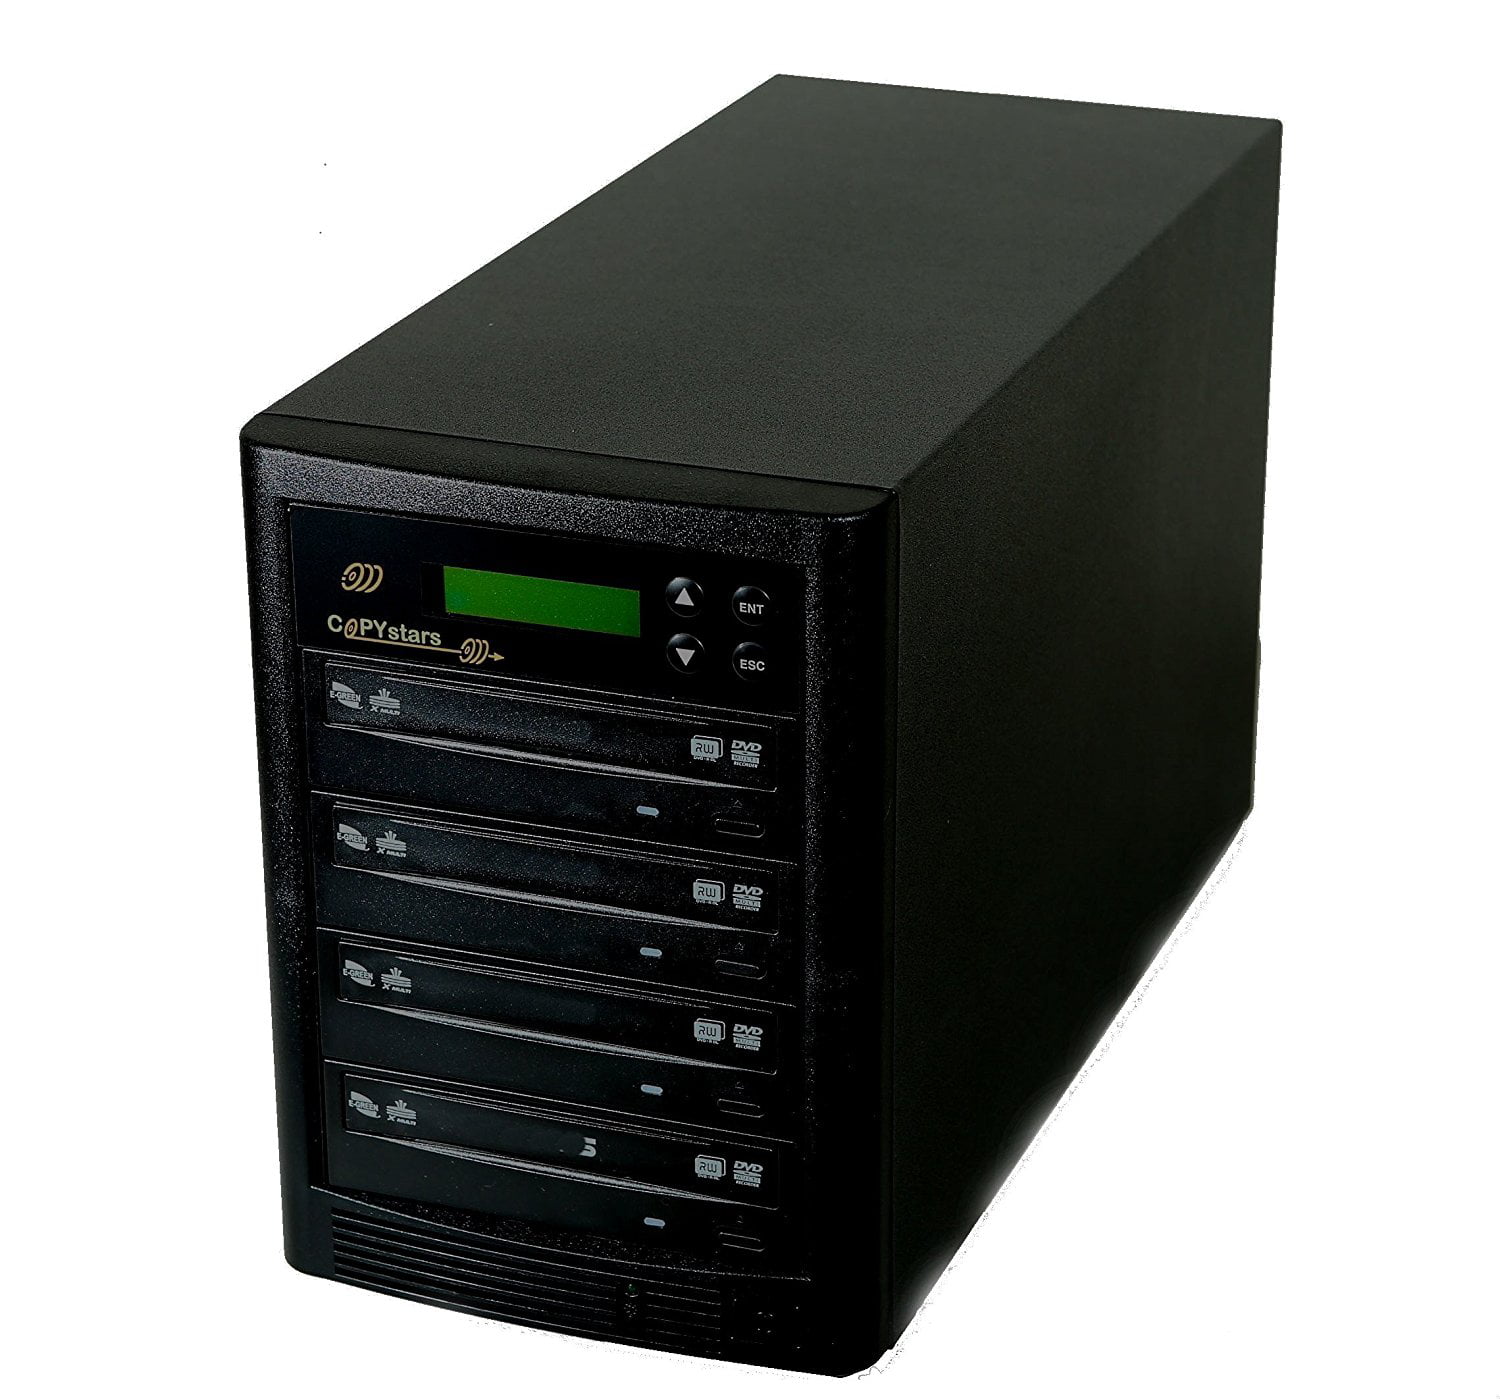 Copystars Disc-Duplicator Sata burners cd dvd-duplication easy copier tower Blu Ray-1TB-12 